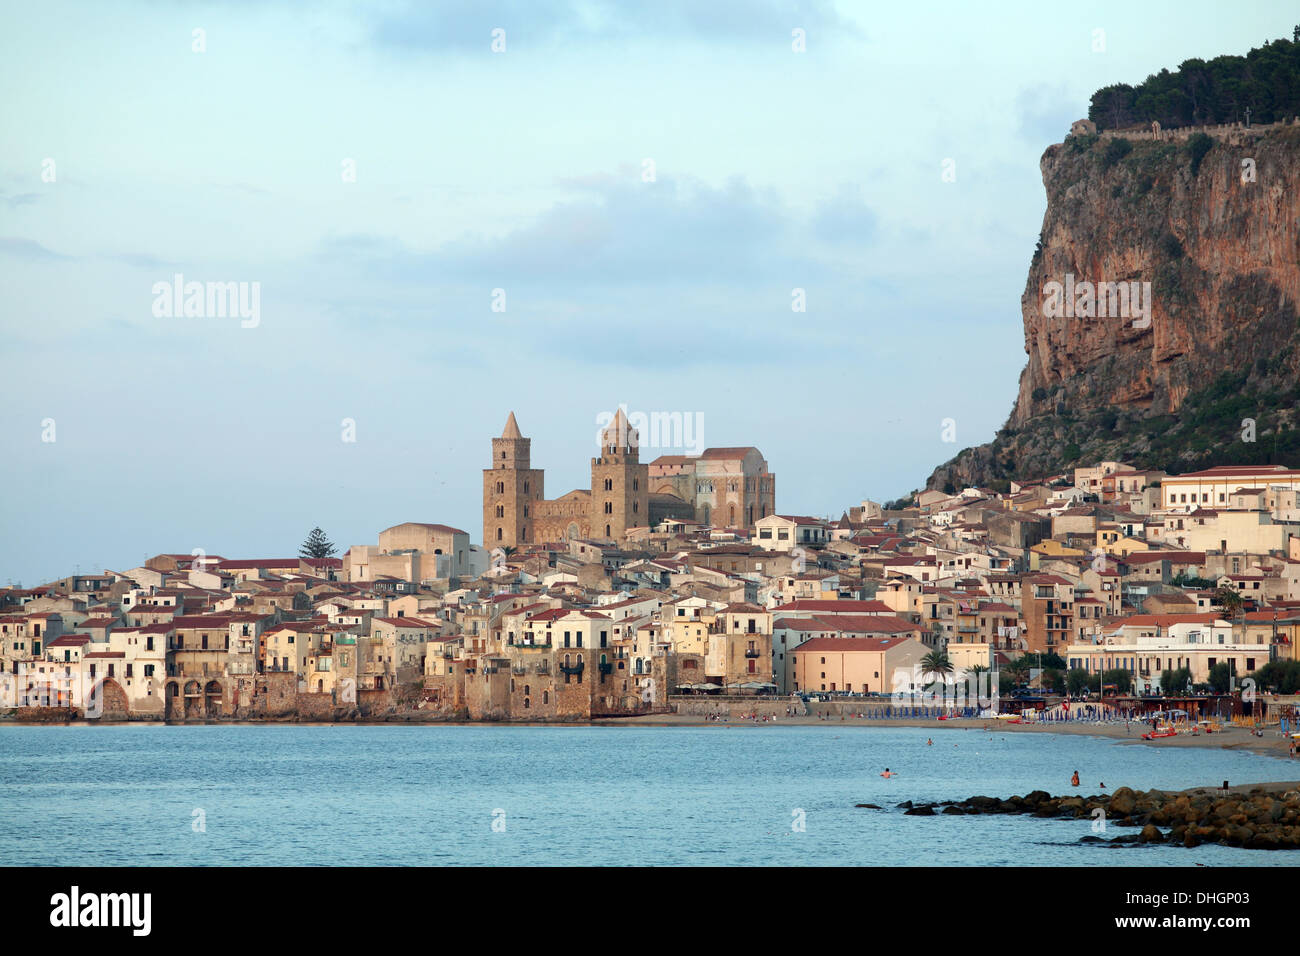 Cefalu, Sicily, Italy. Stock Photo